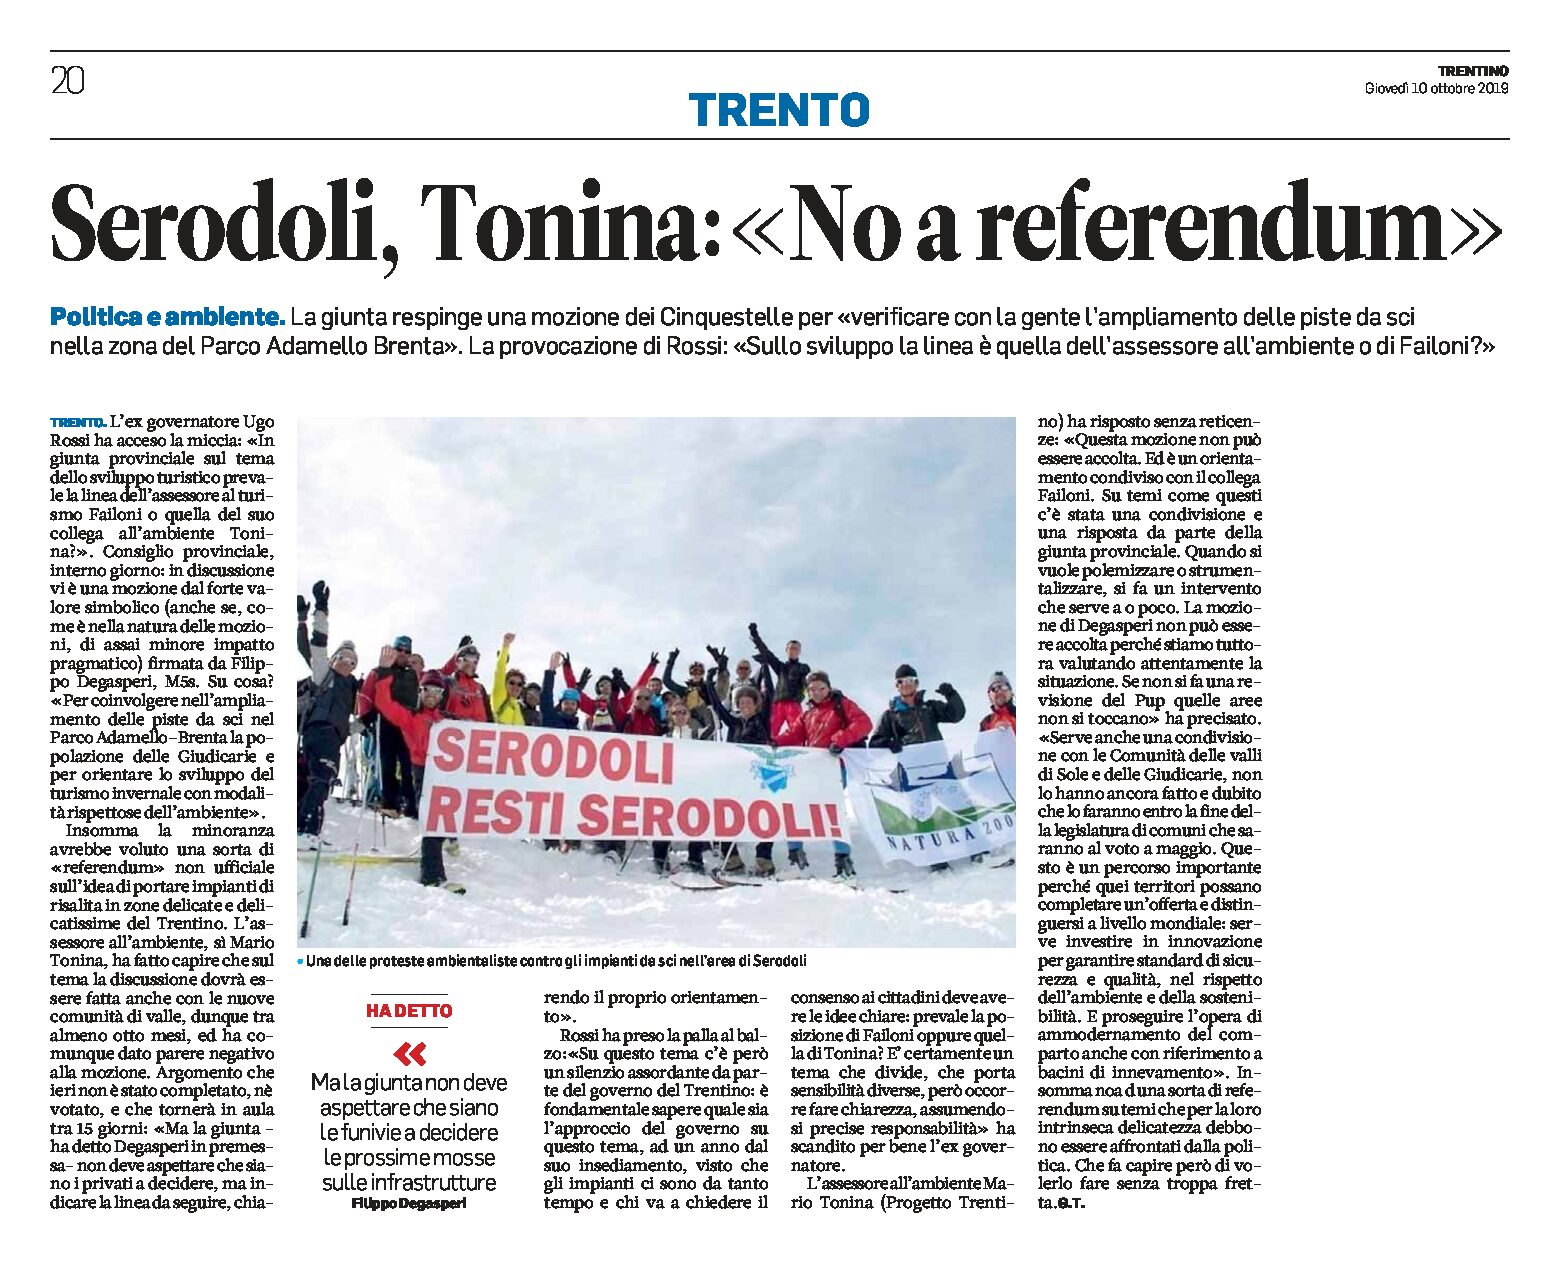 Serodoli: Tonina “no a referendum”